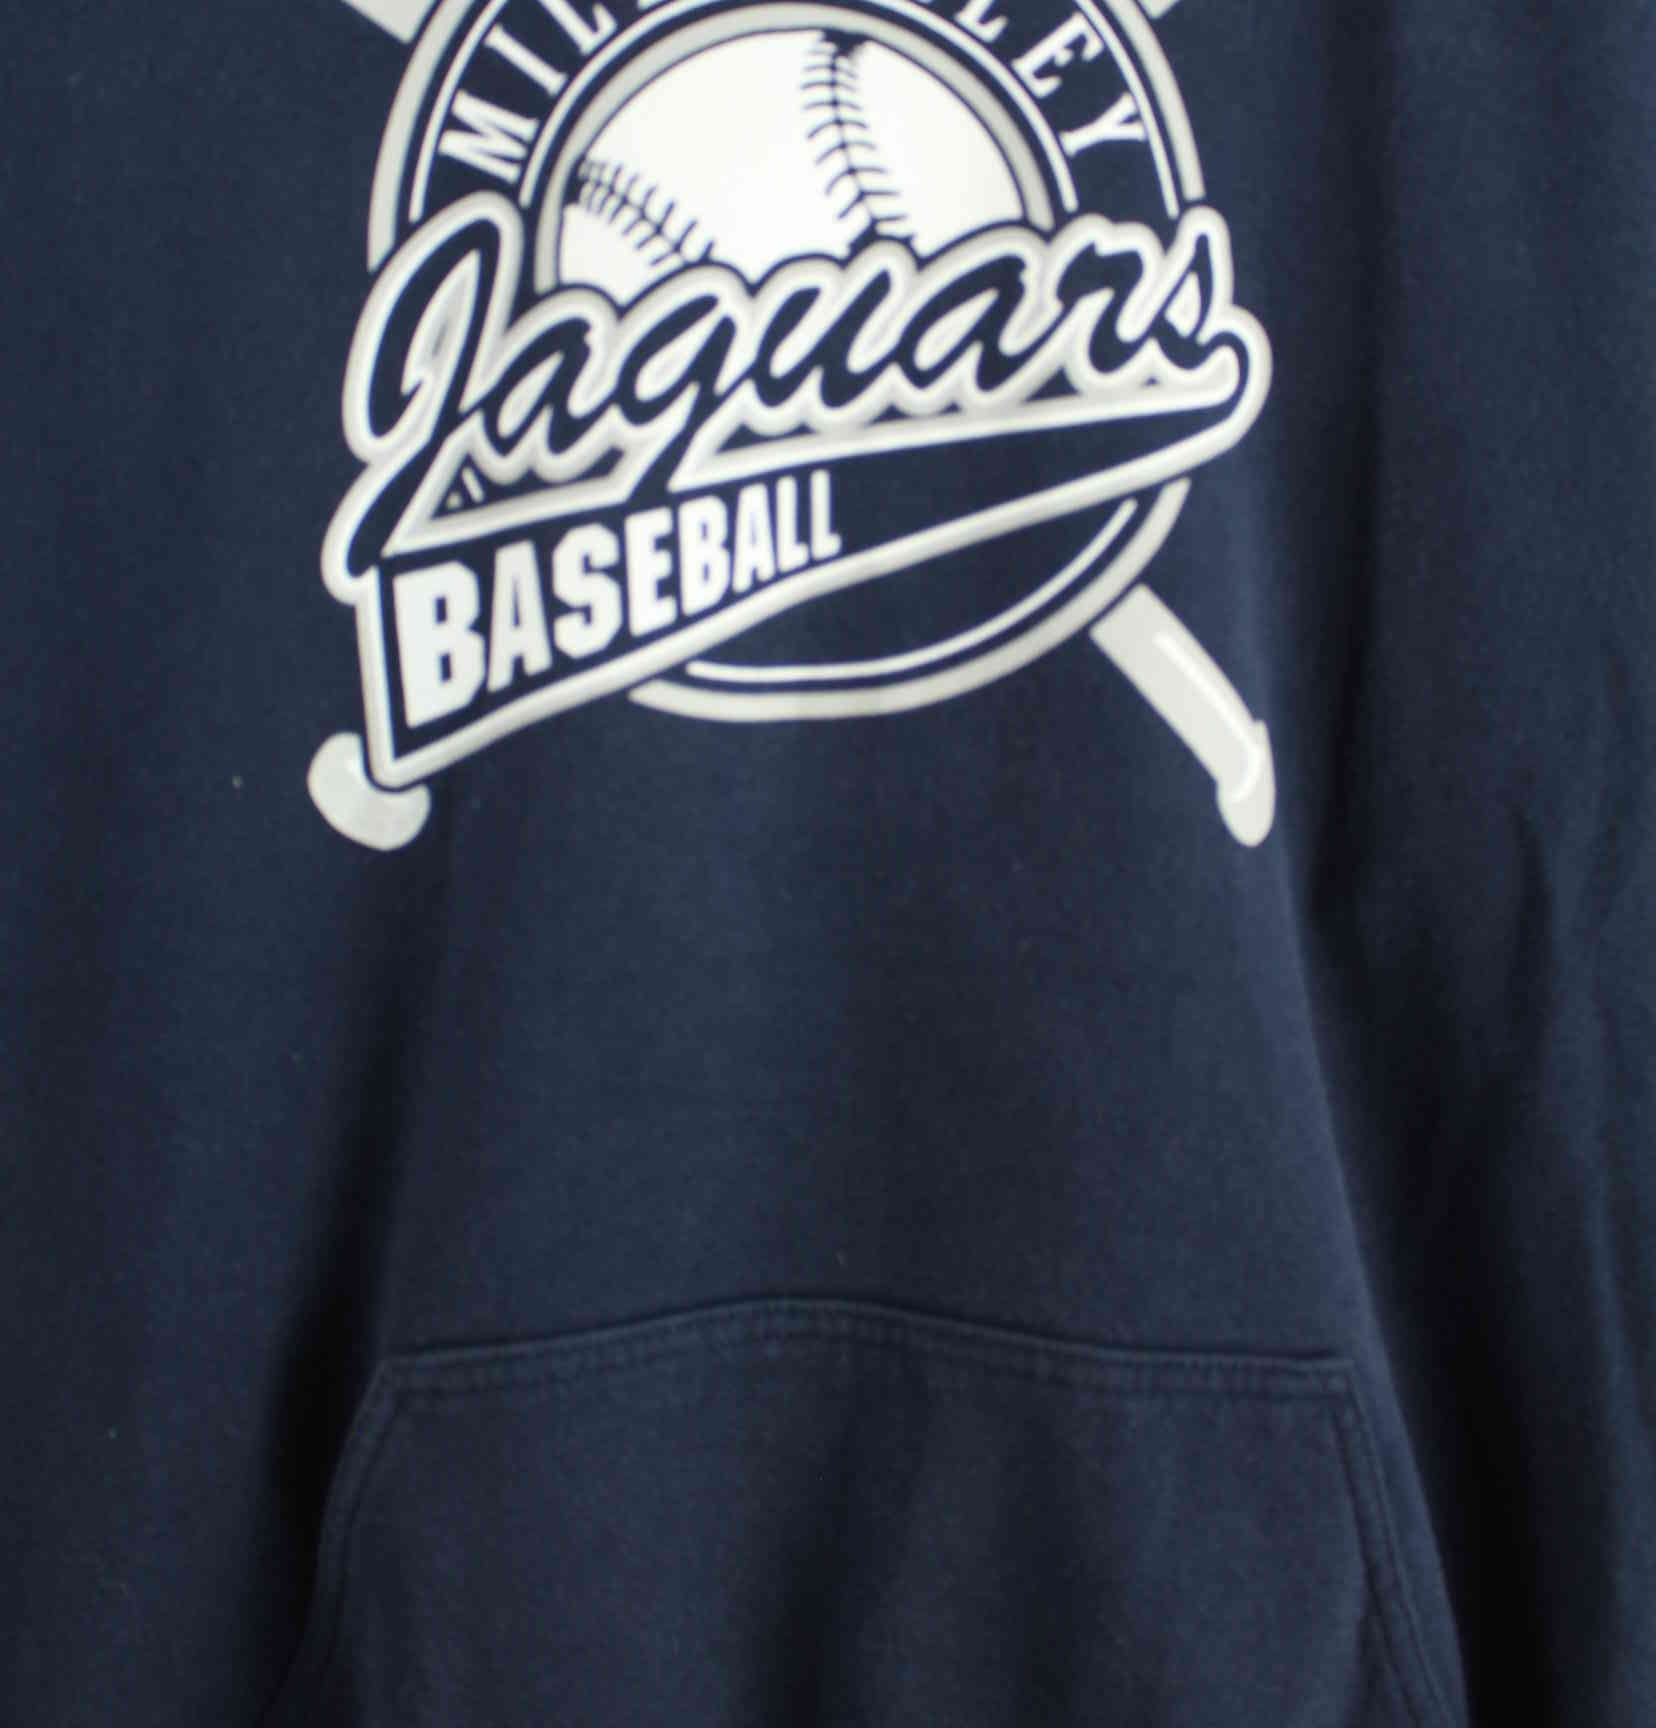 Gildan Mill Valley Jaguars Baseball Hoodie Blau L (detail image 1)